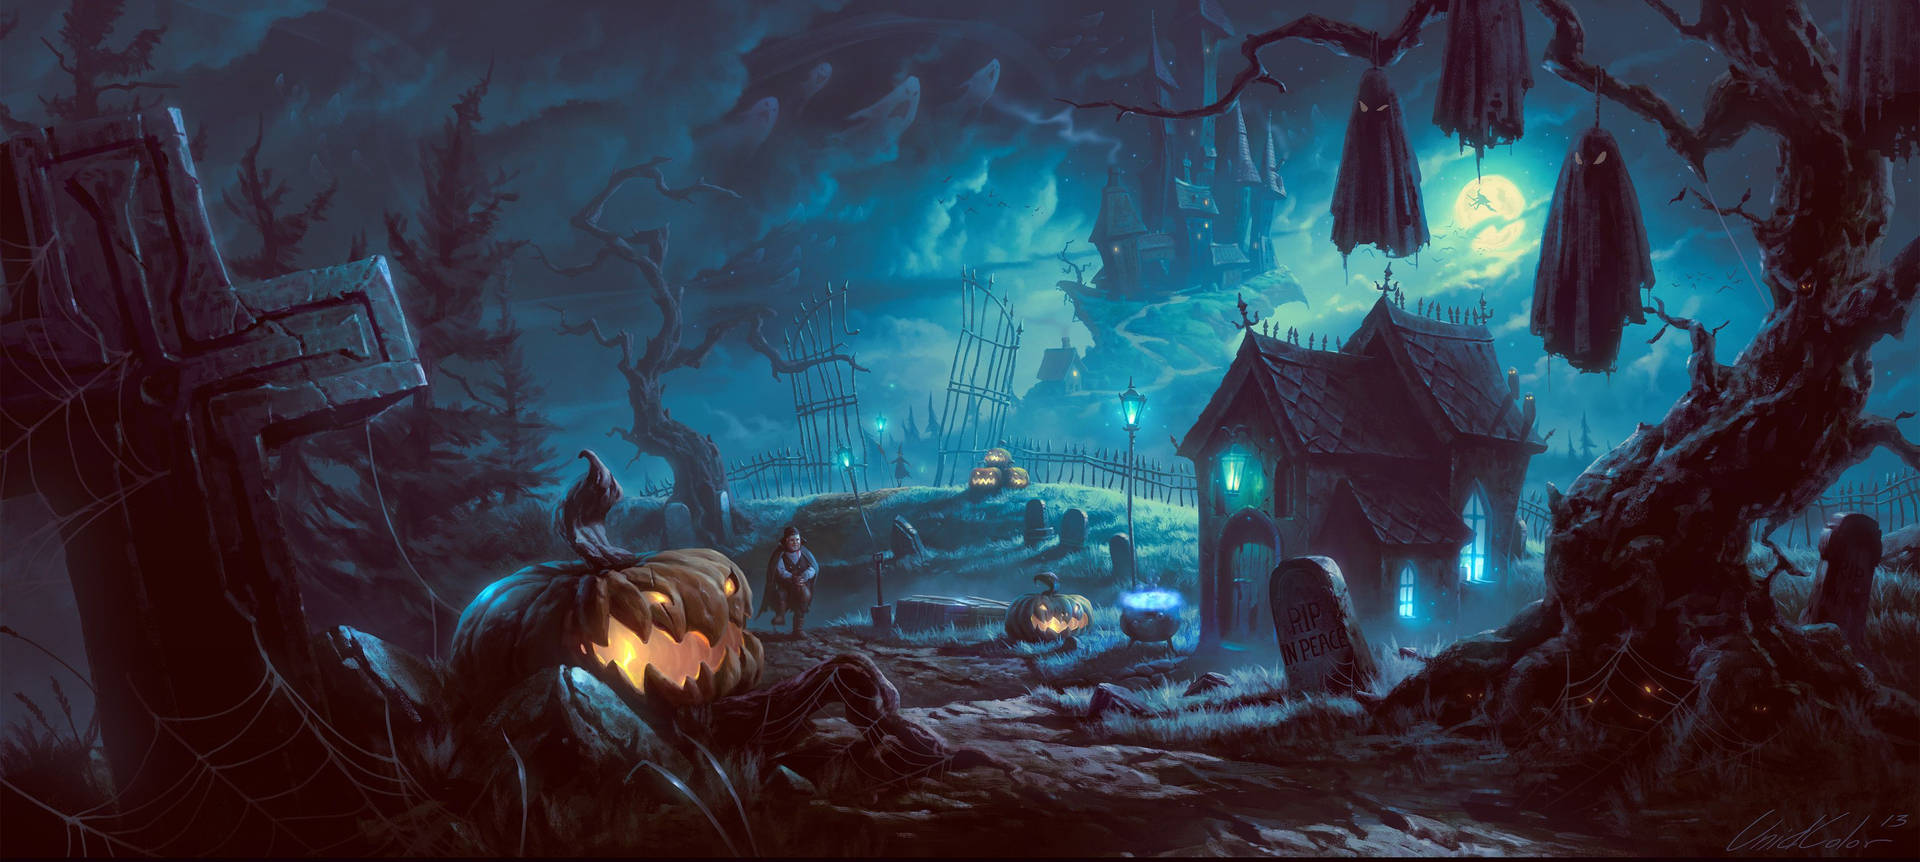 Scary Halloween Castle In A Graveyard